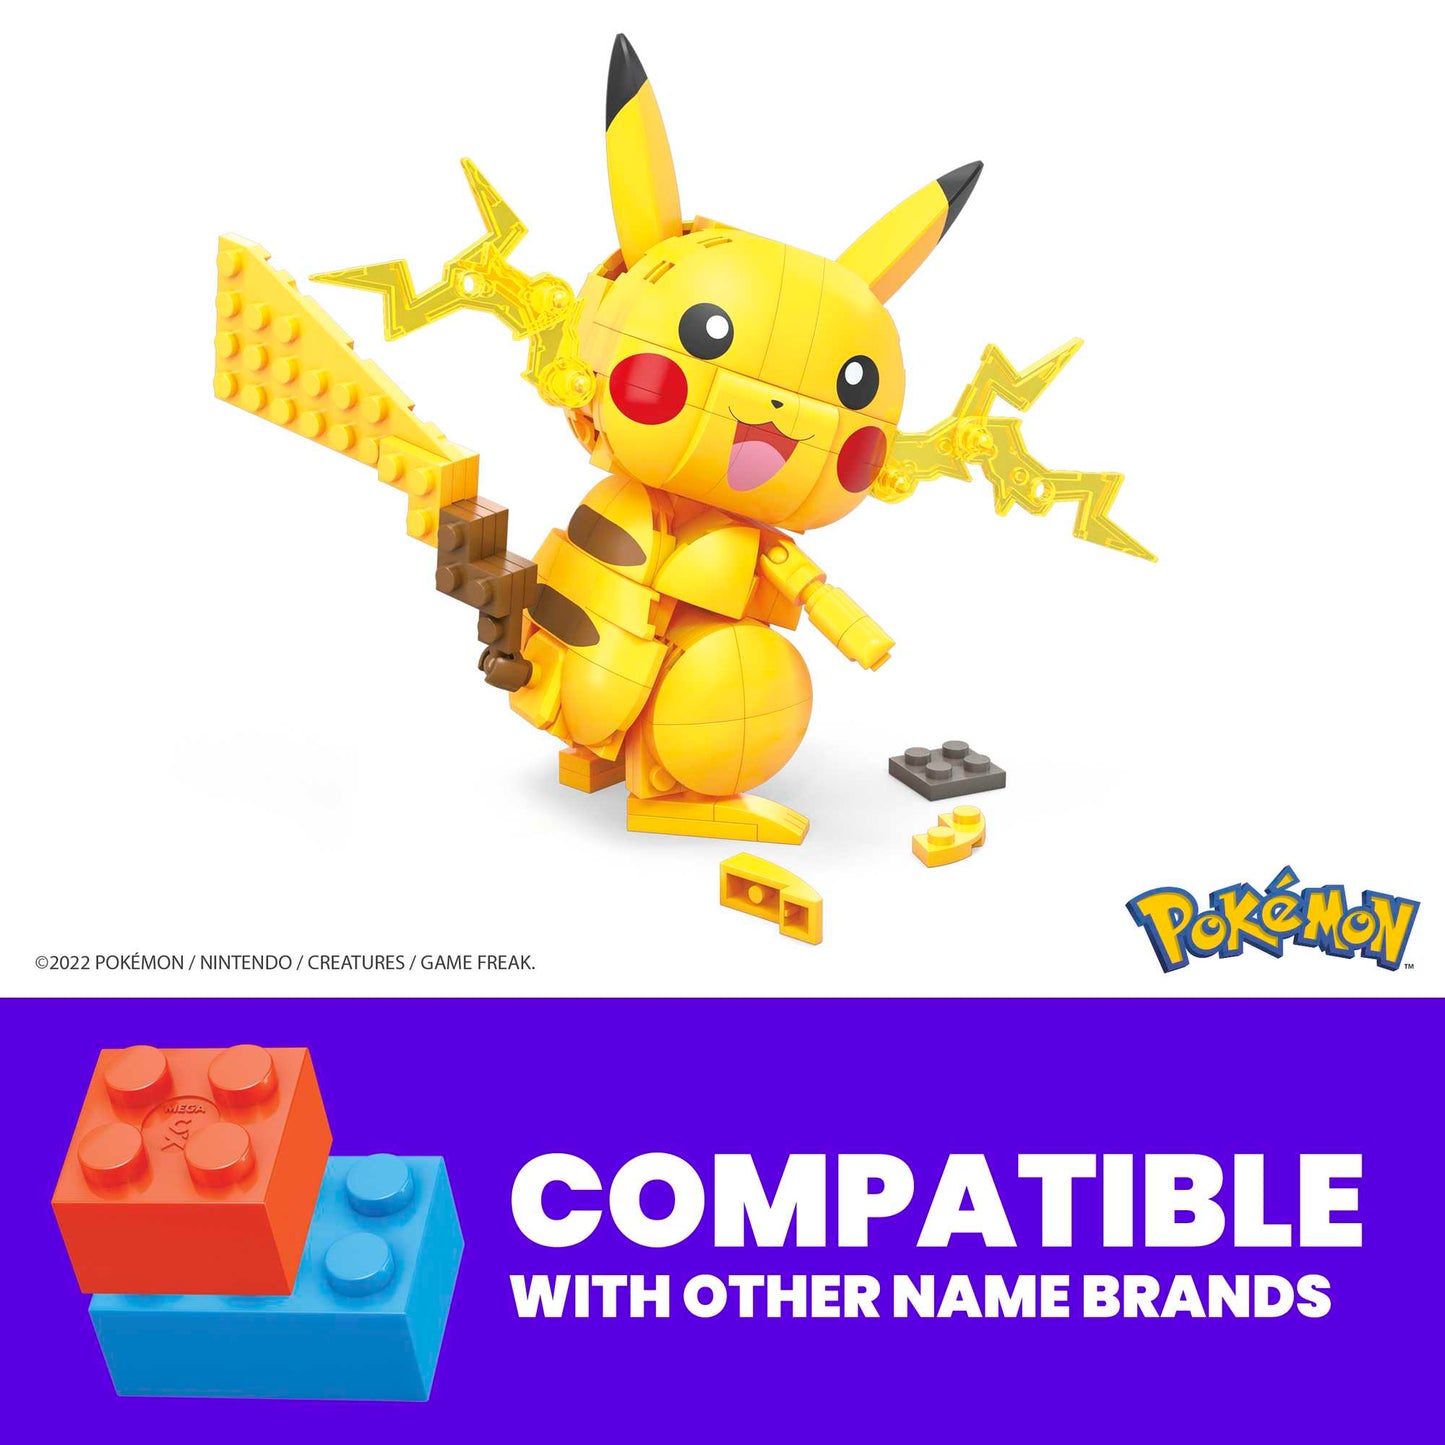 MEGA™ Construx Pokémon Pikachu